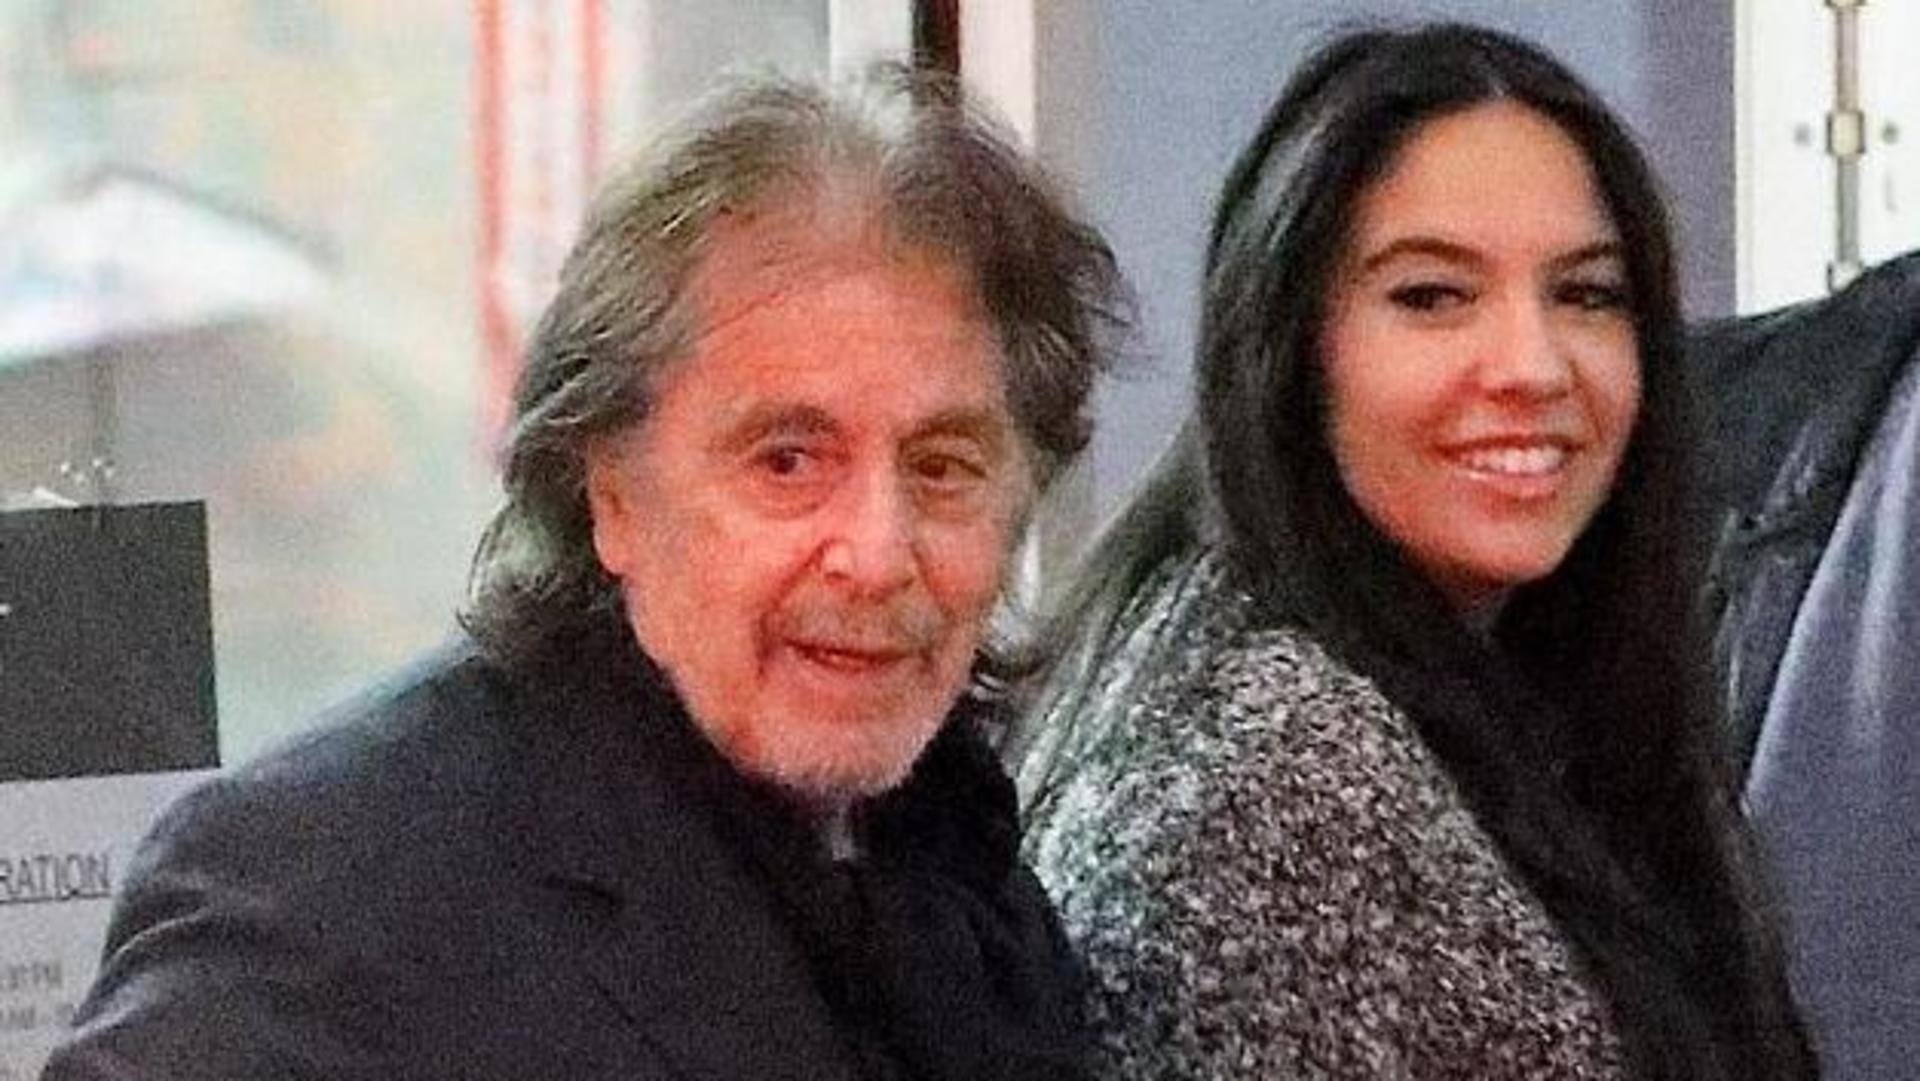 Al Pacino (83) and Noor Alfallah (29) to become parents